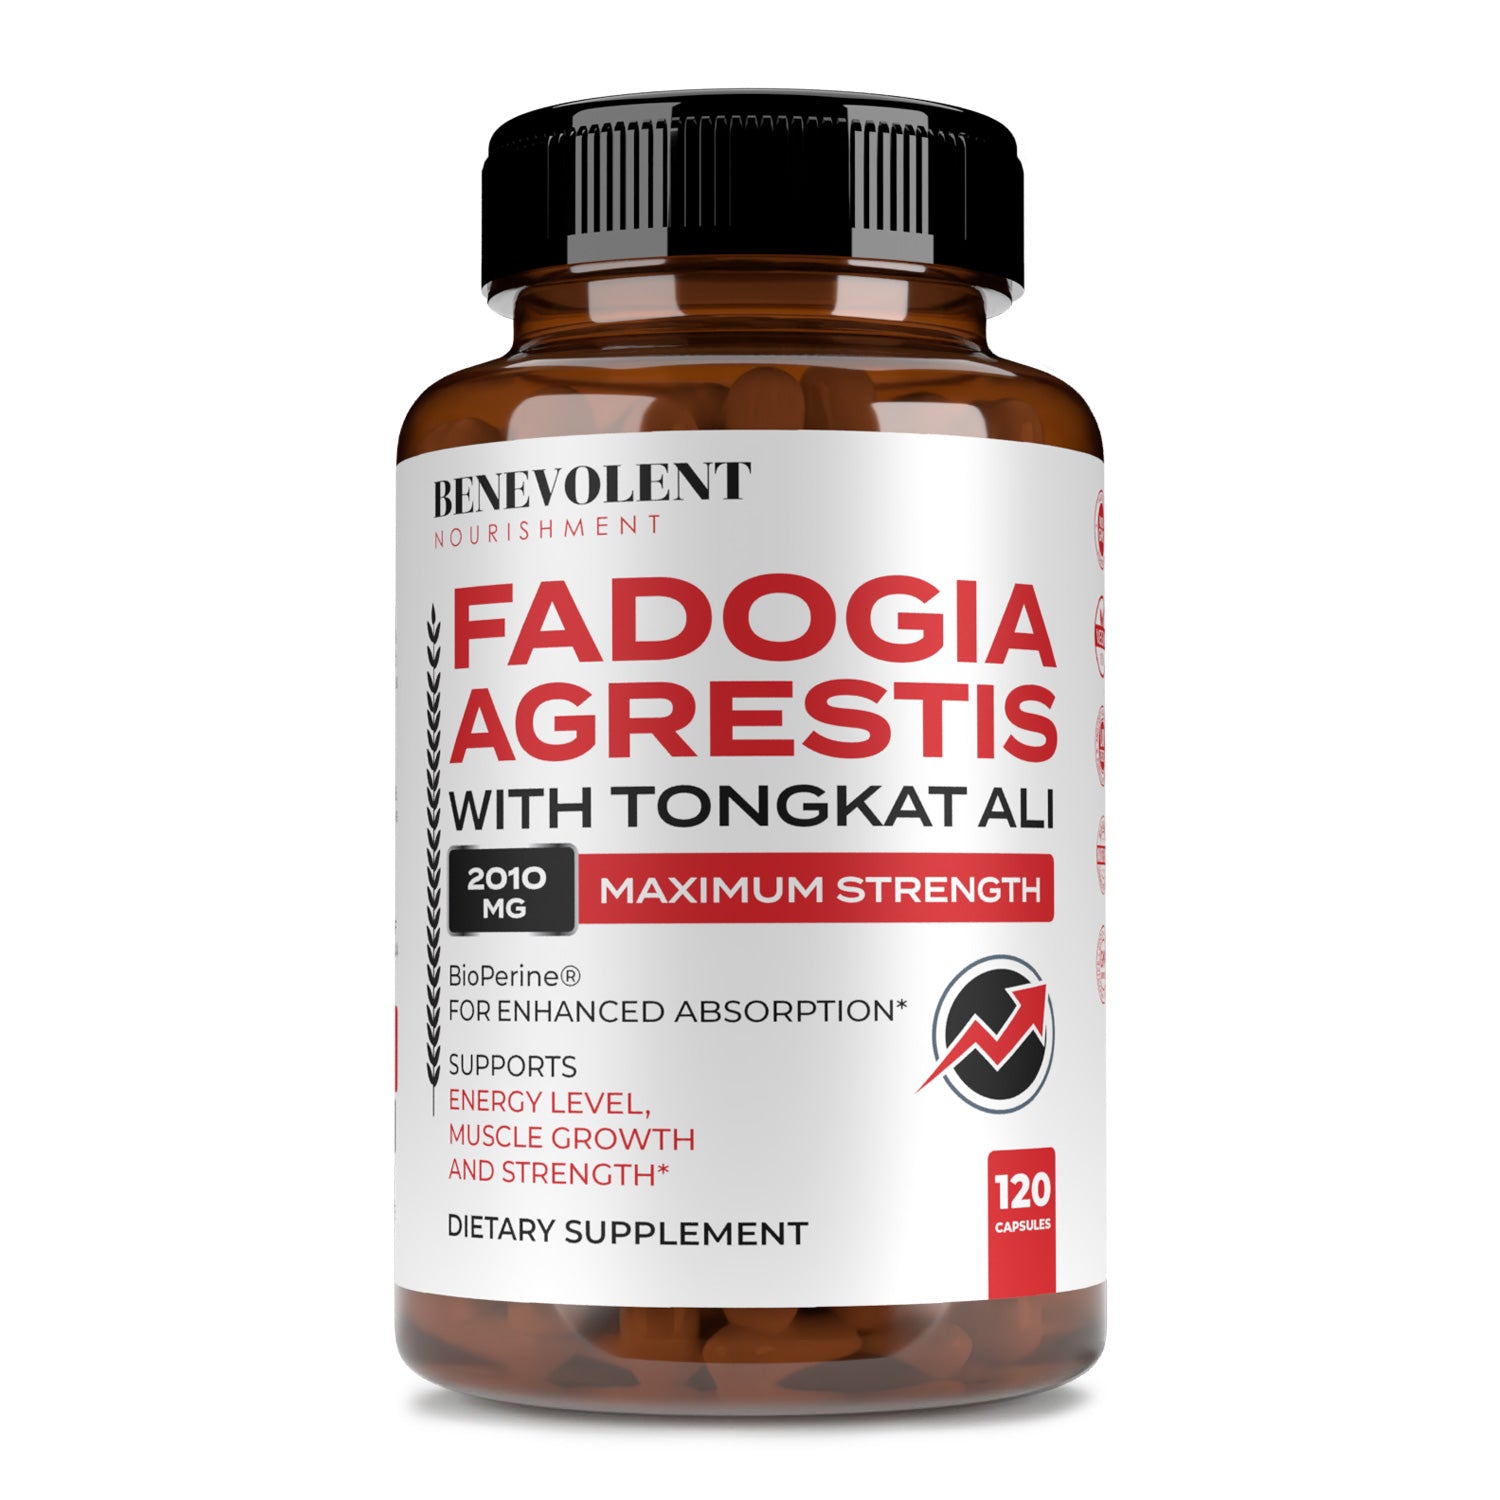 Fadogia Agrestis